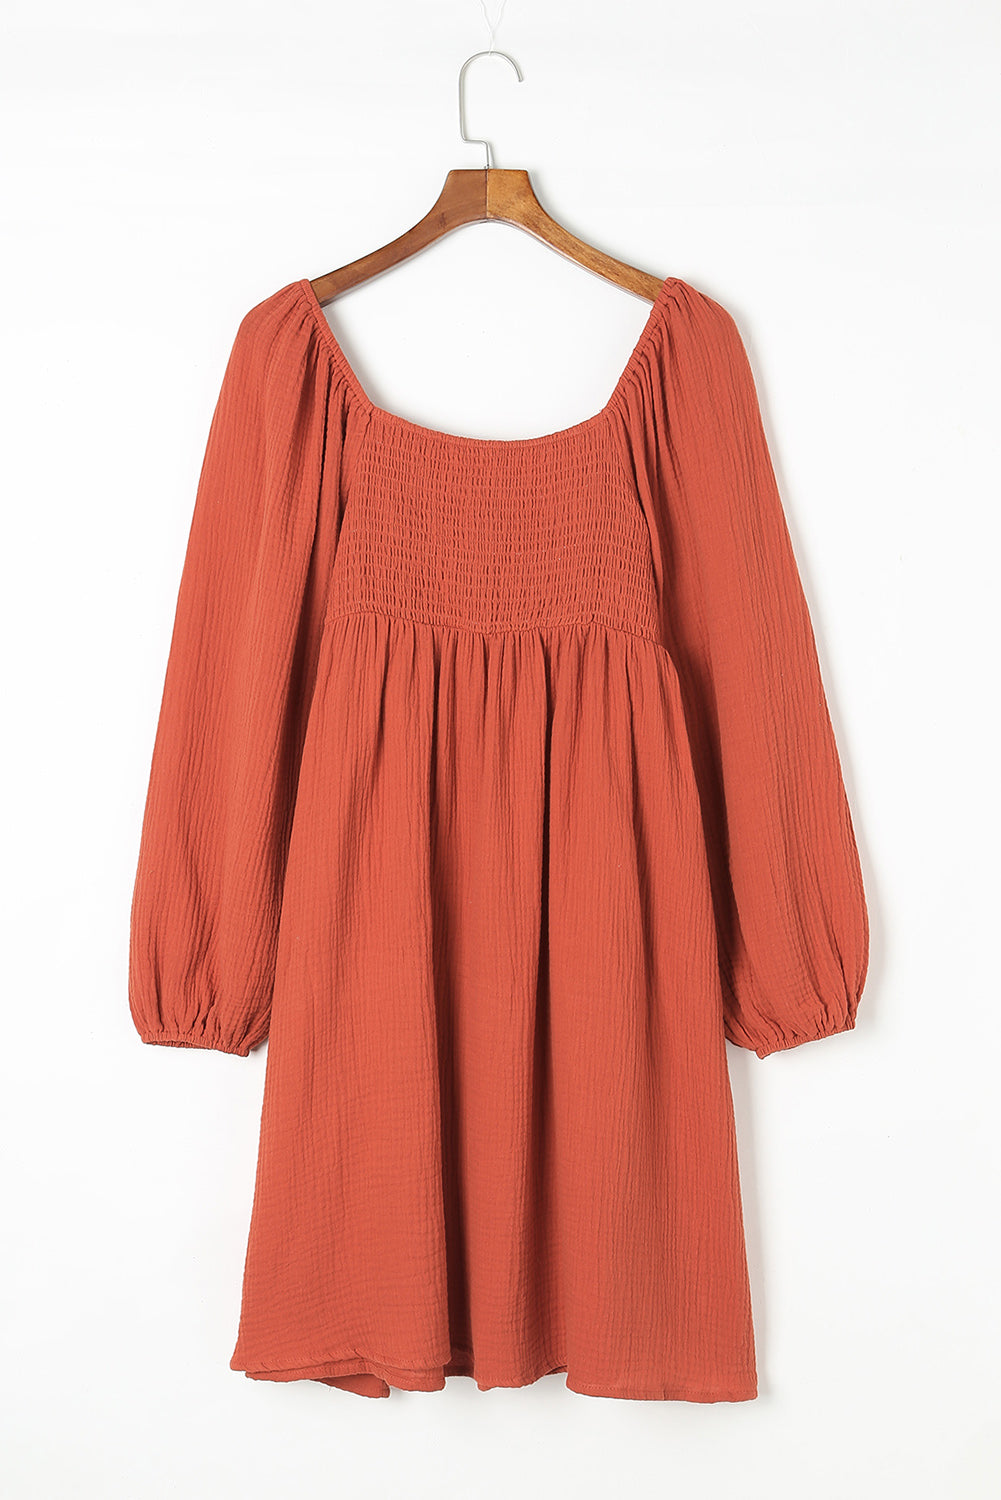 Brown Textured Front Crochet Babydoll Dress